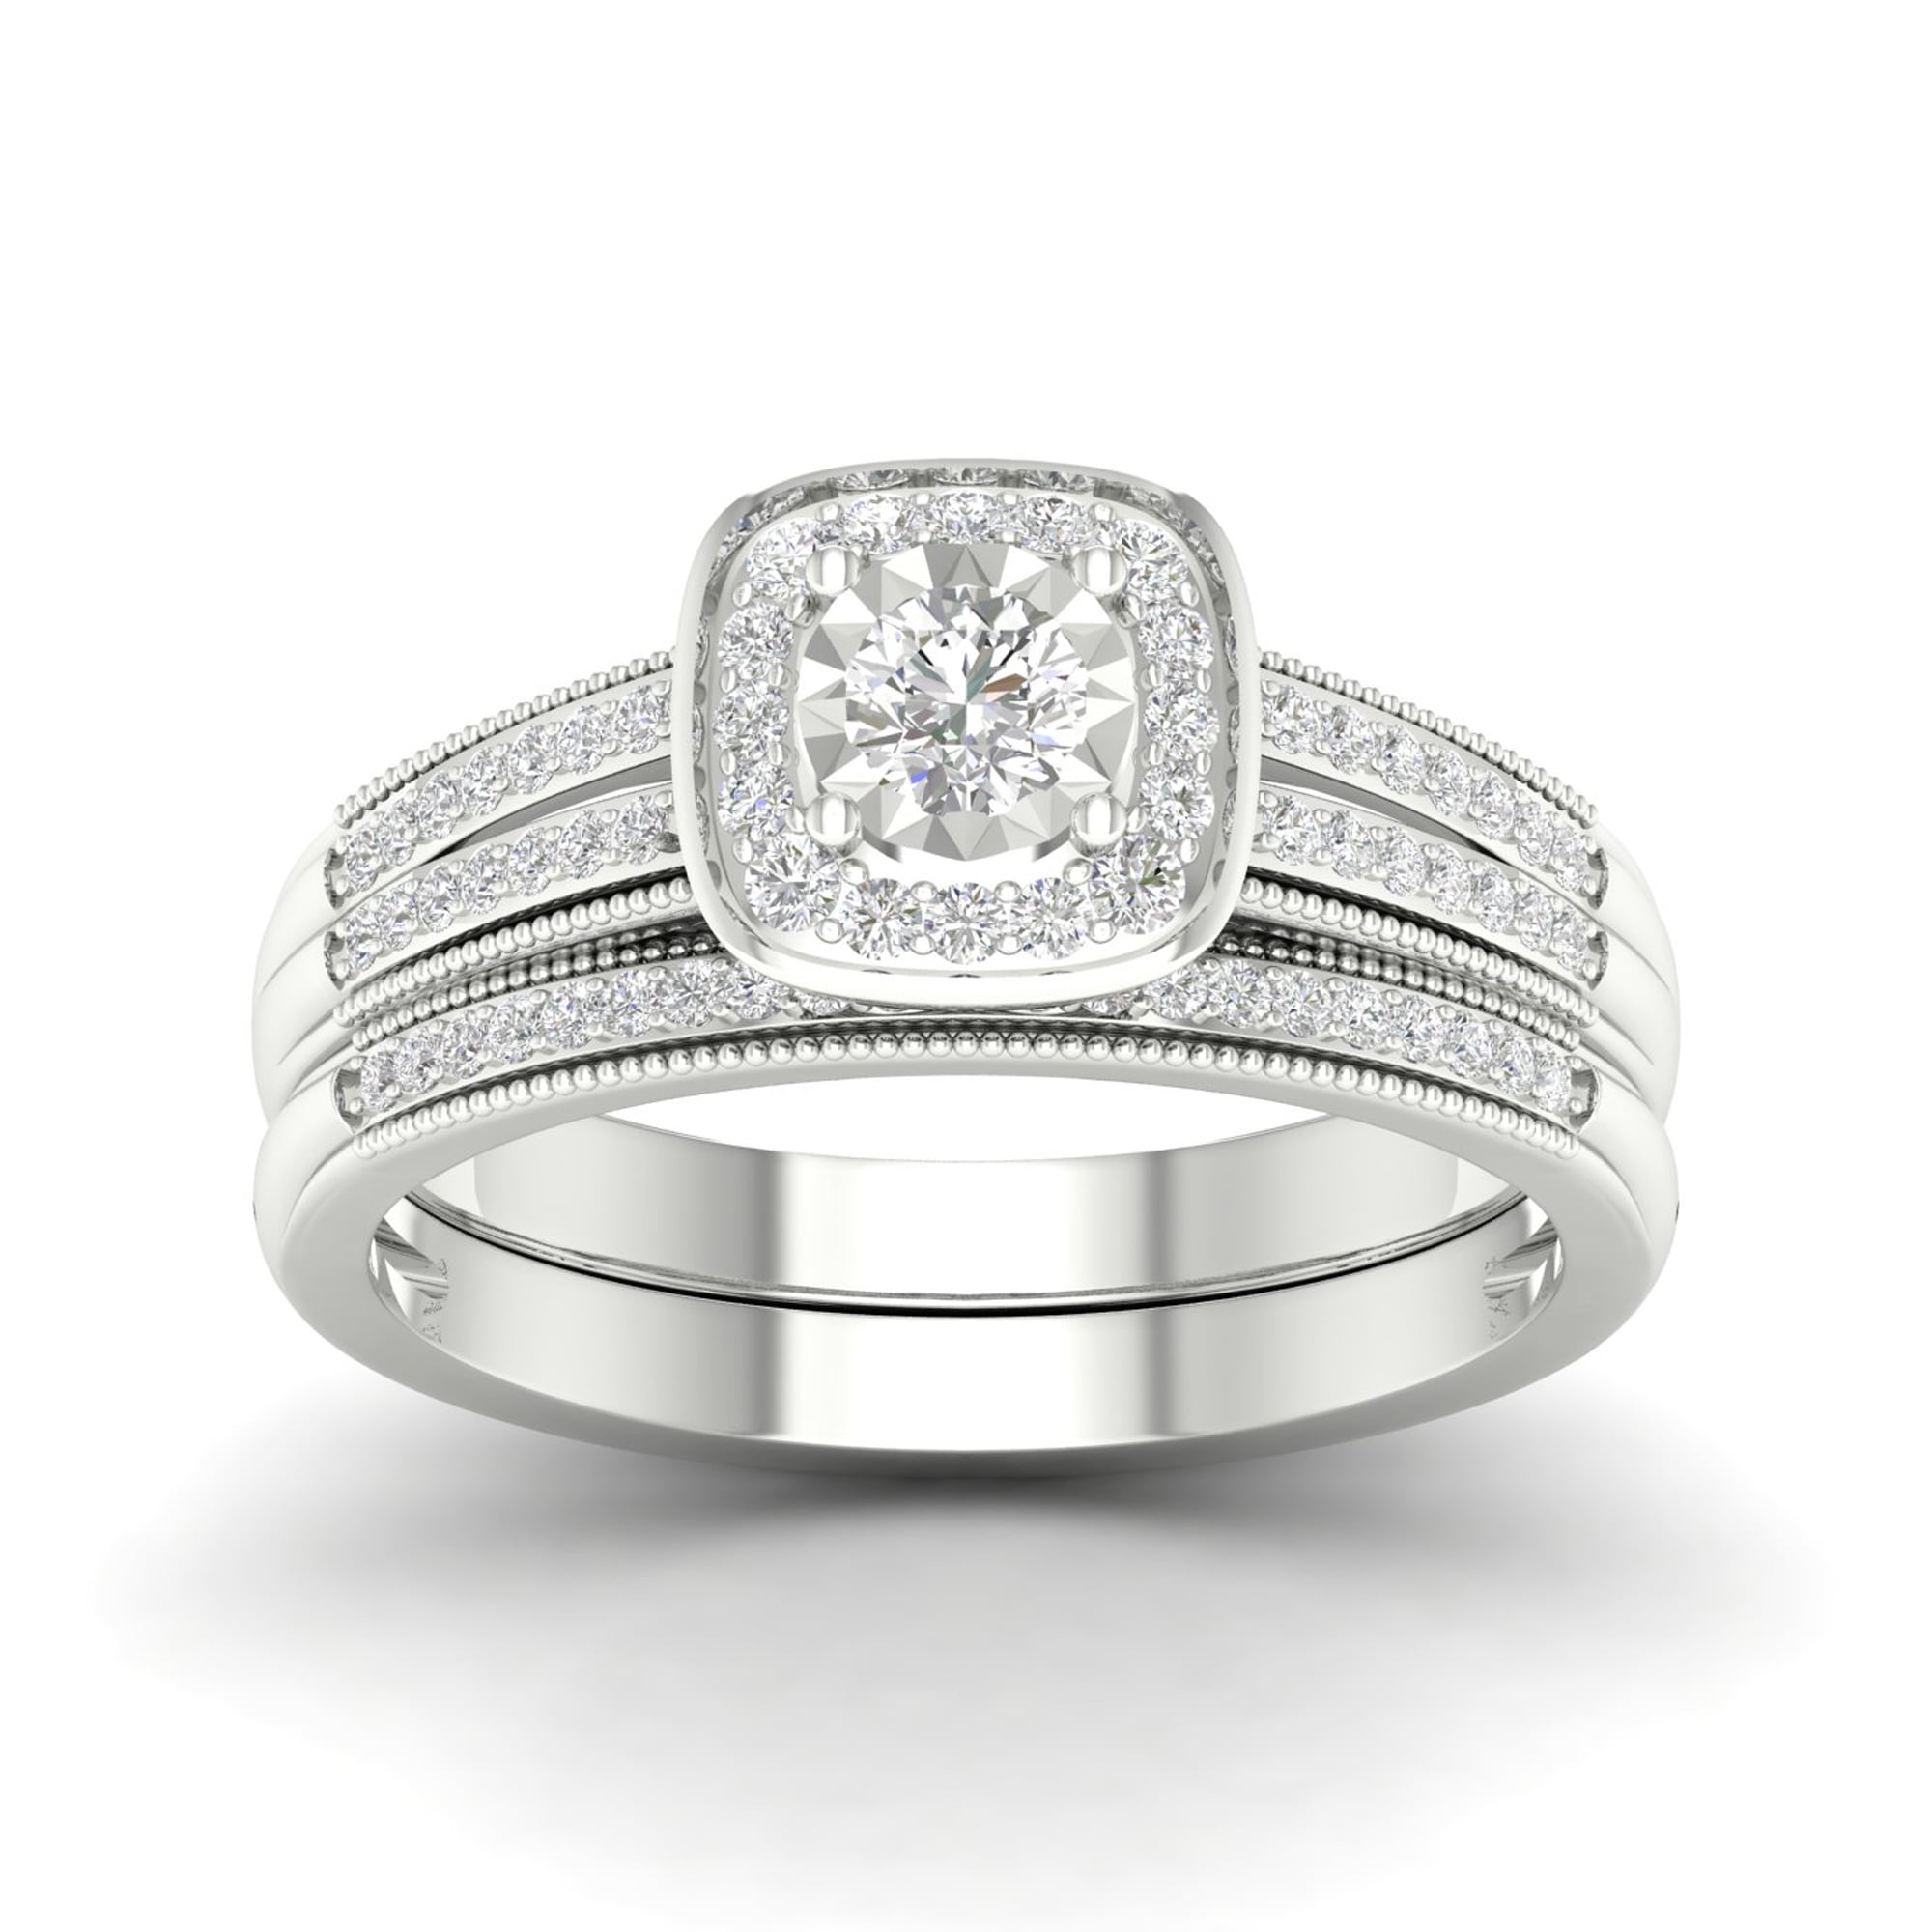 1/4 Ct TDW Diamond S925 Sterling Silver Bridal Ring